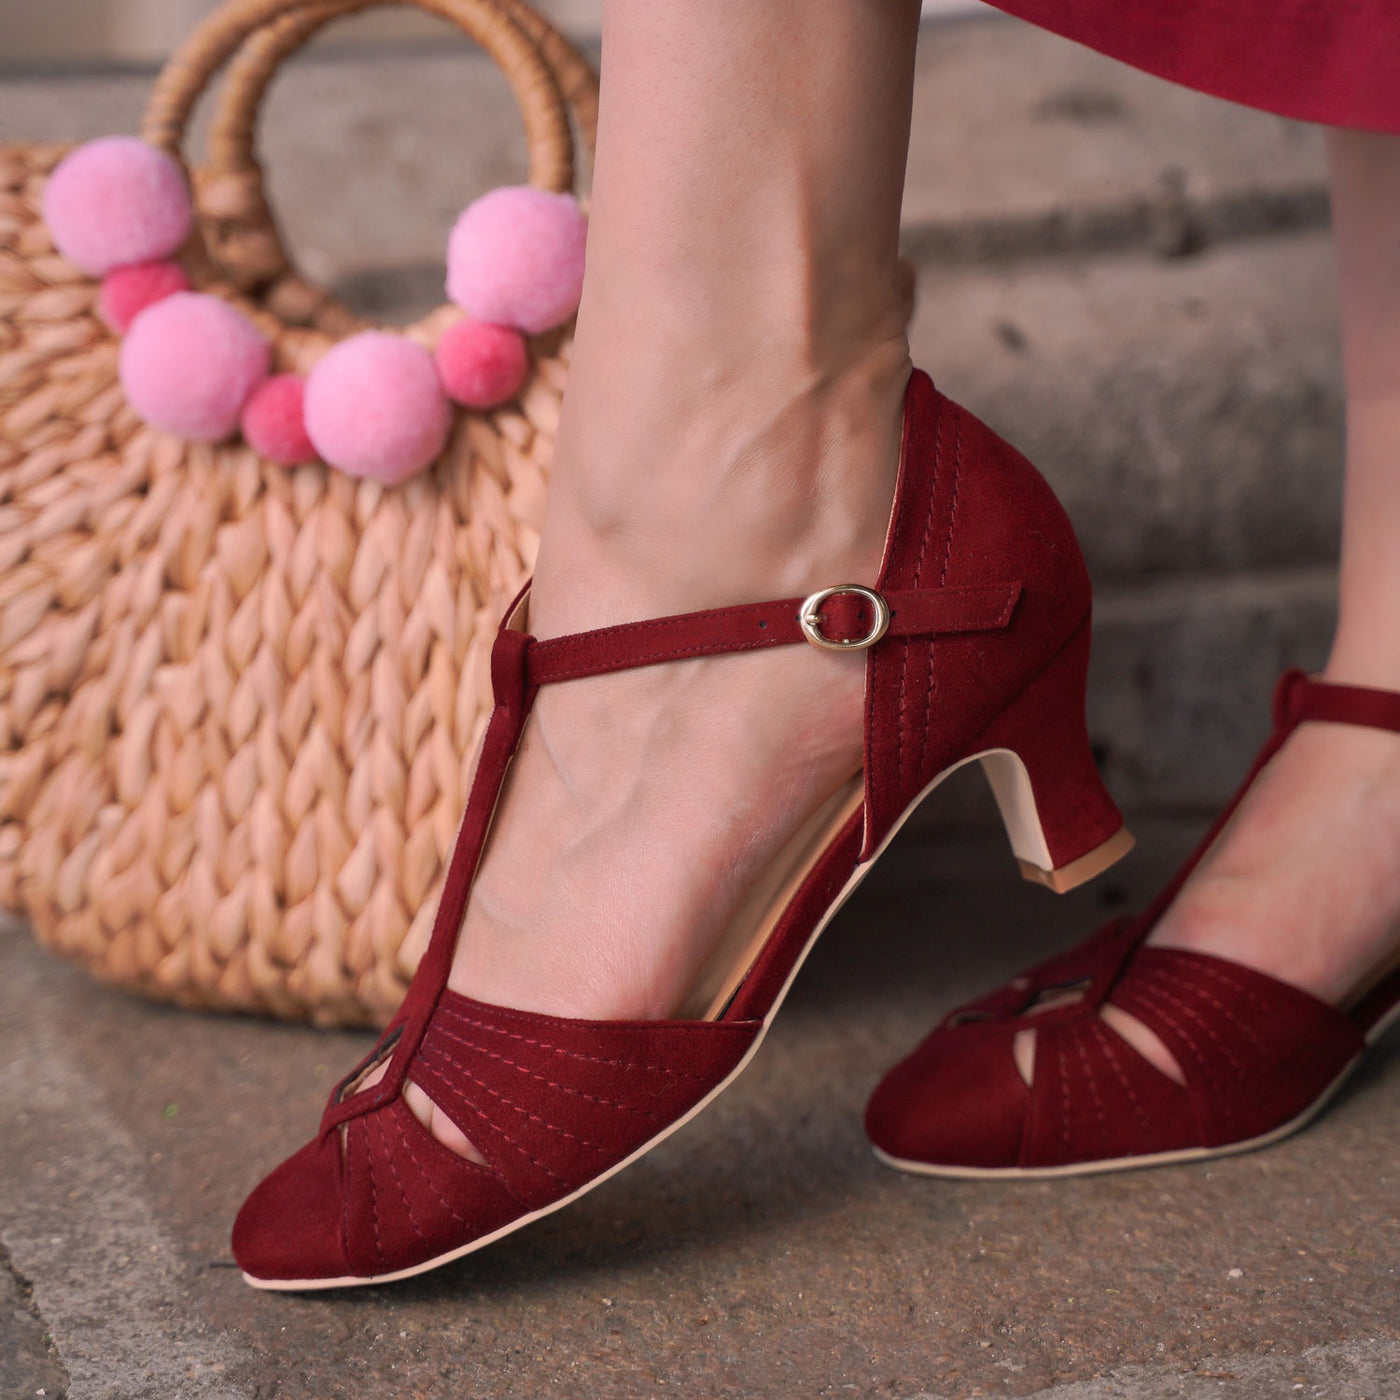 Charlie Stone Vintage Inspired heels Retro 1940’s 1950’s Style Ladies Shoes wine red vegan